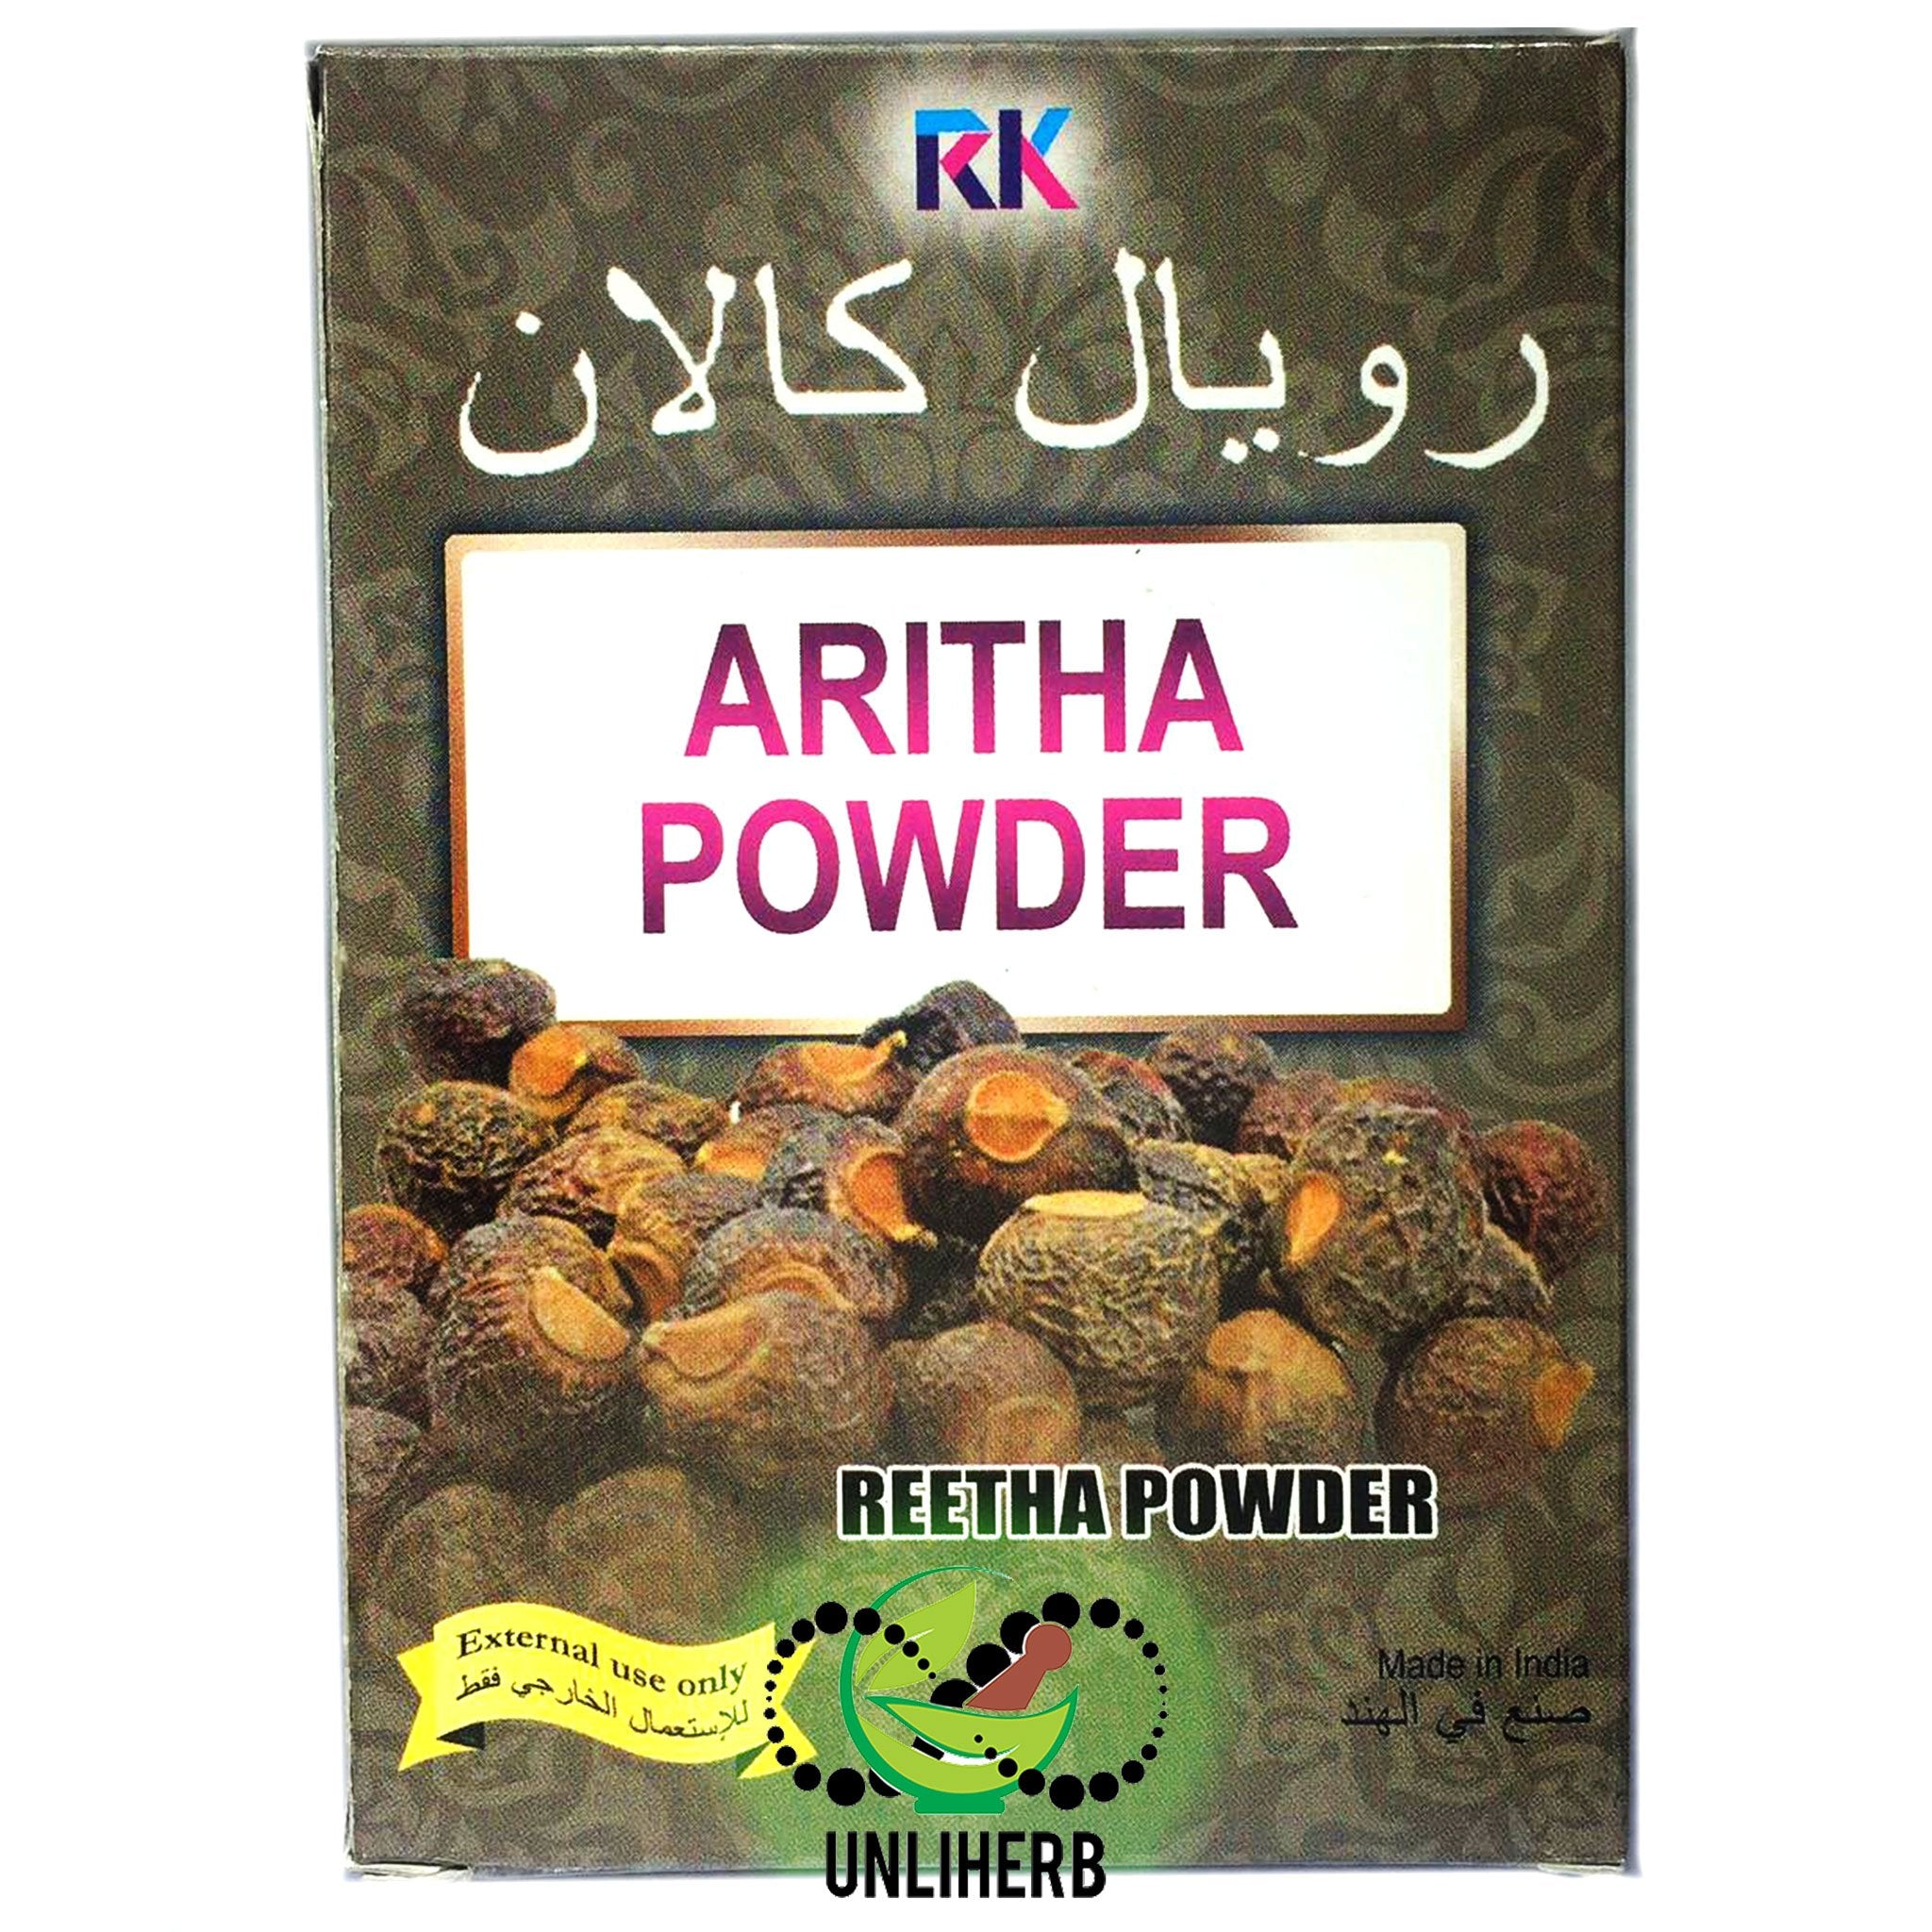 Royal Kalan Aritha Powder Reetha Powder 100g